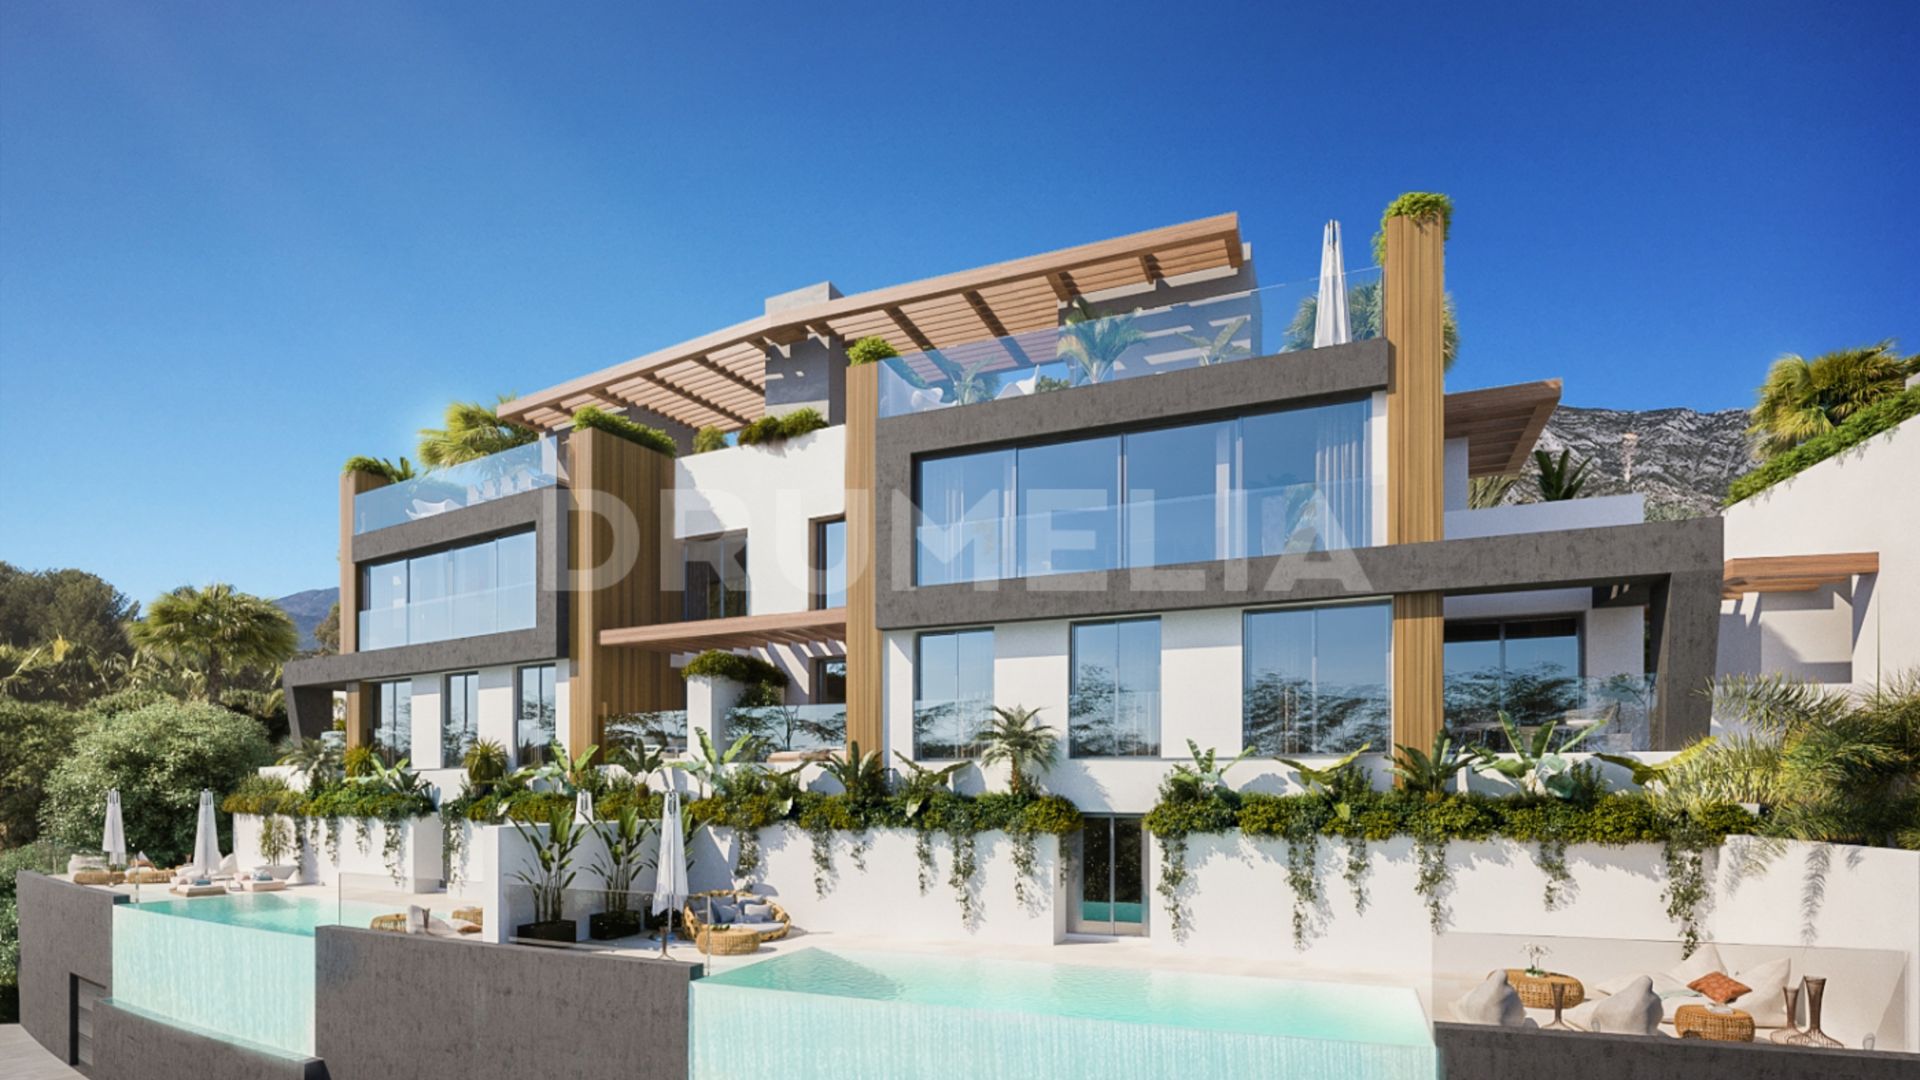 New Stunning Modern Semi-Detached Luxury Villa (project), Benahavis